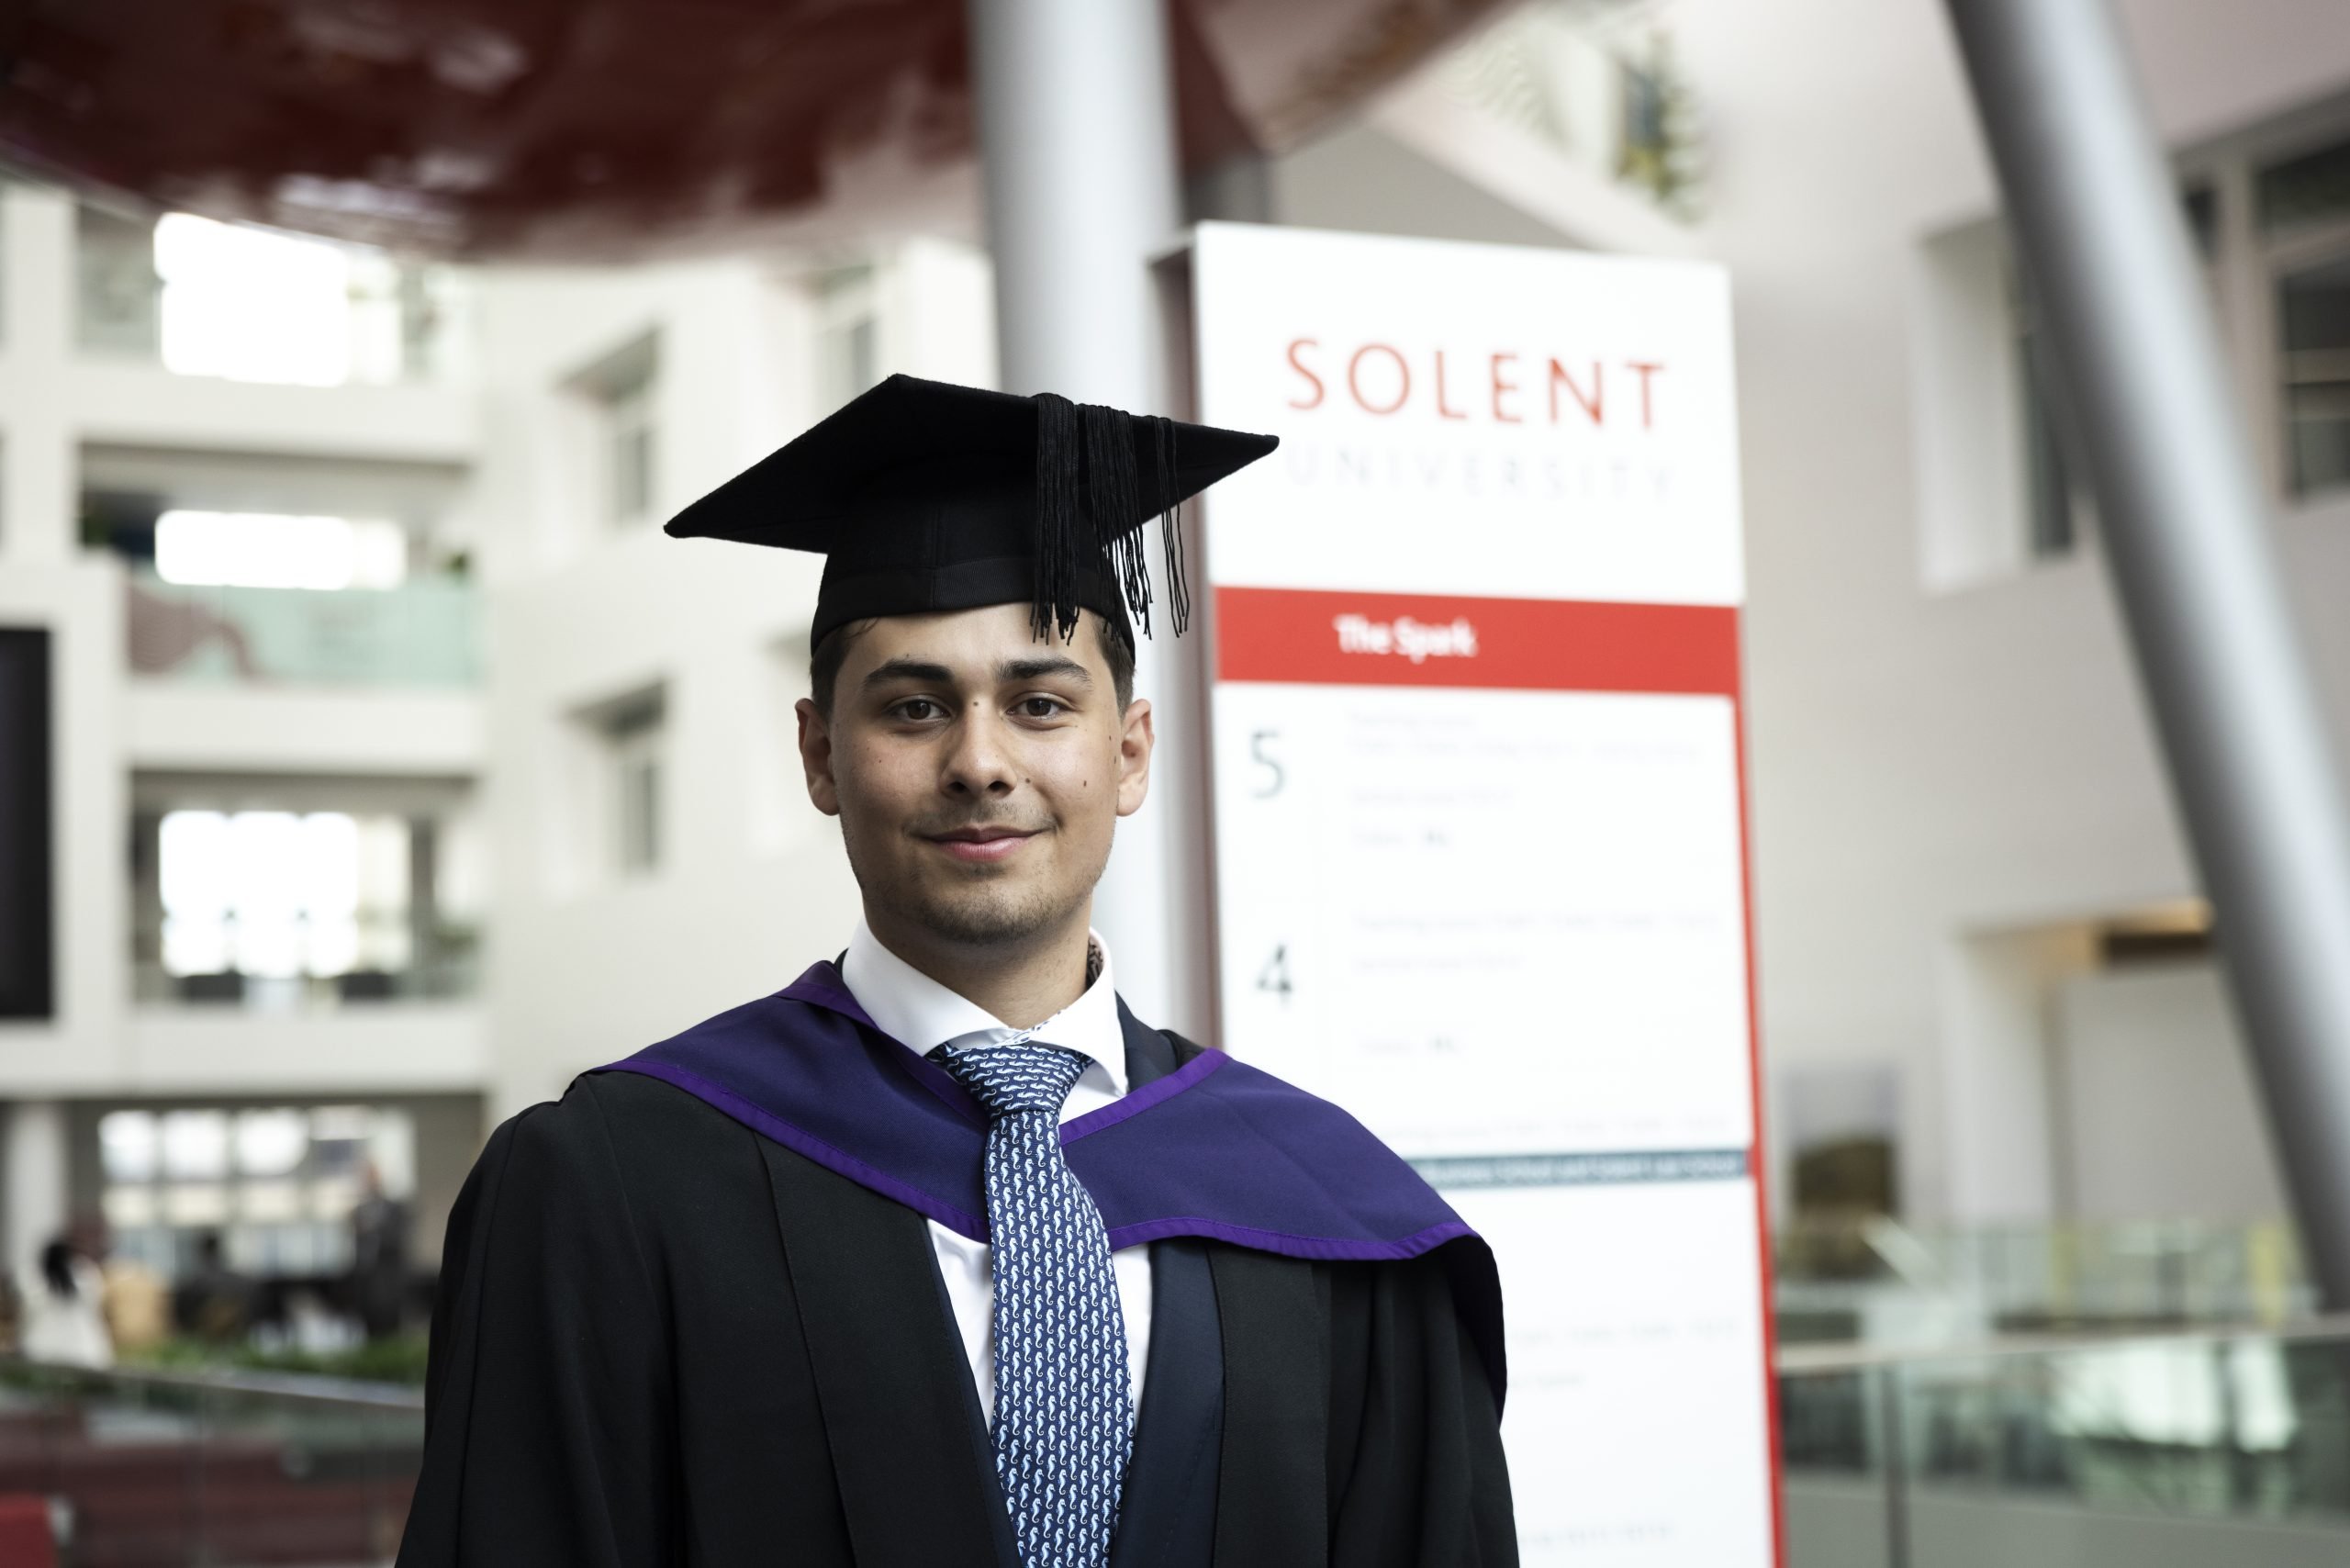 Alex Baughan at the Solent University graduation